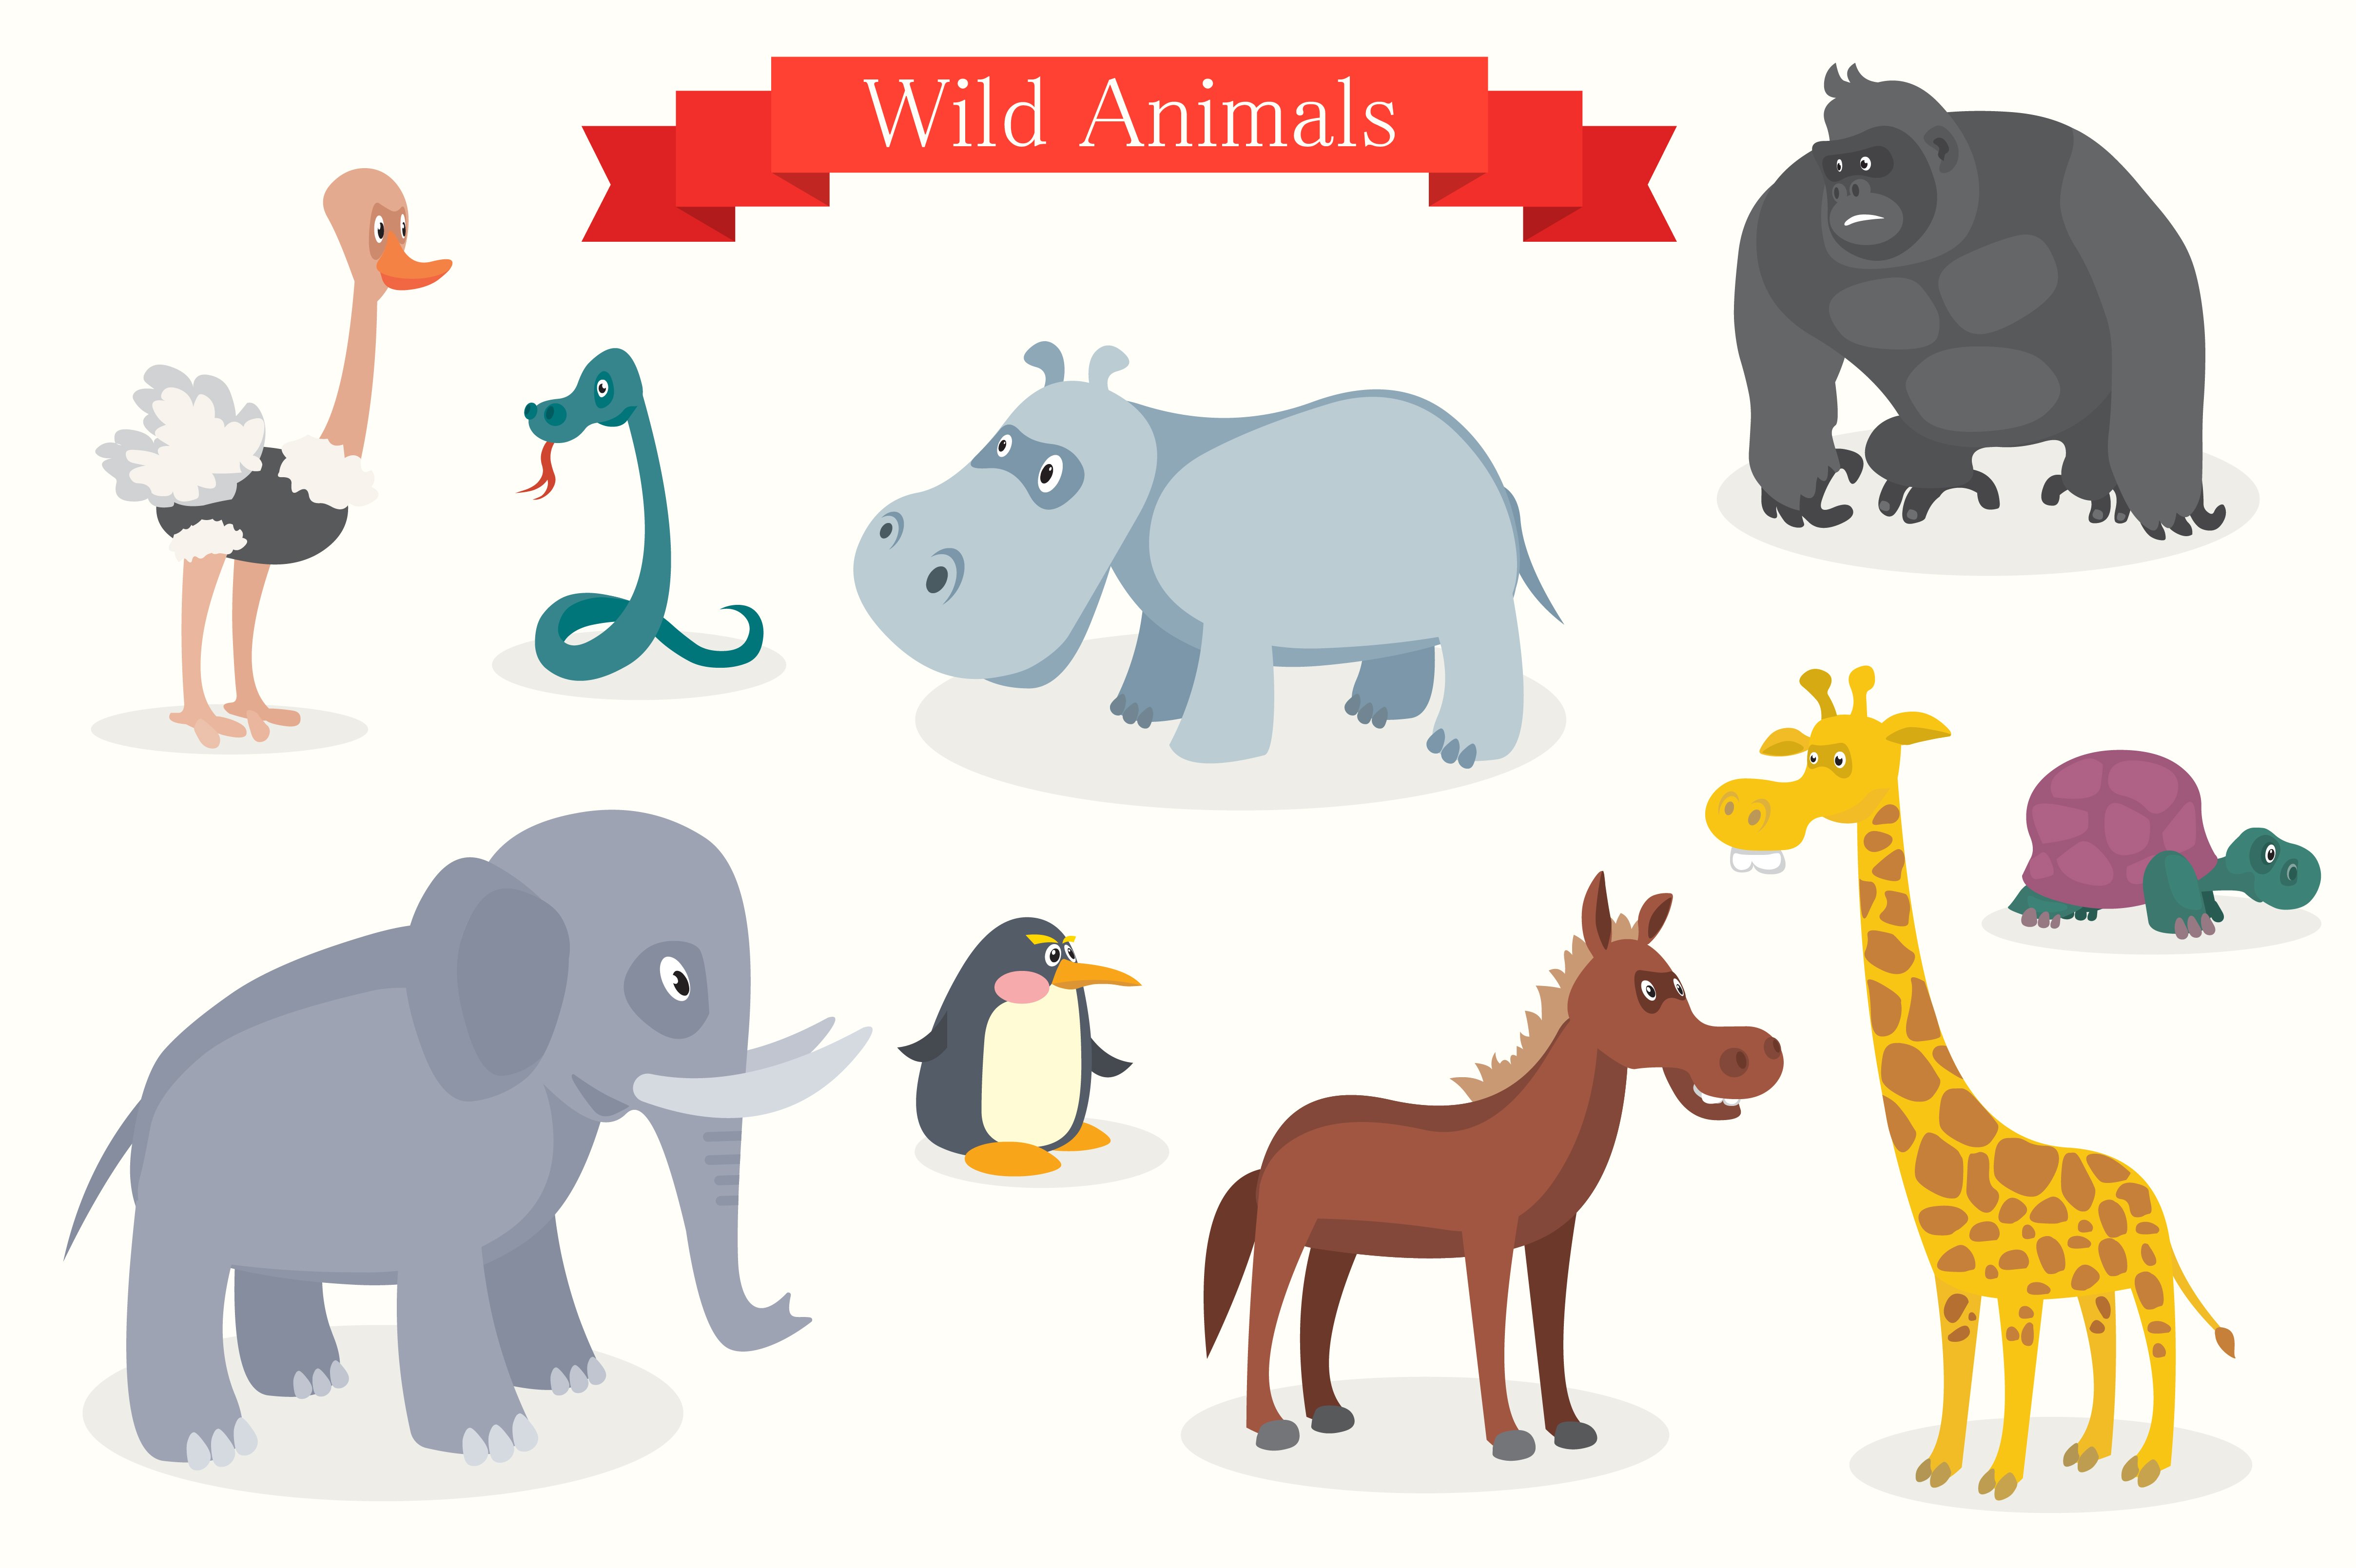 Animal cartoons, safari, wild nature cover image.